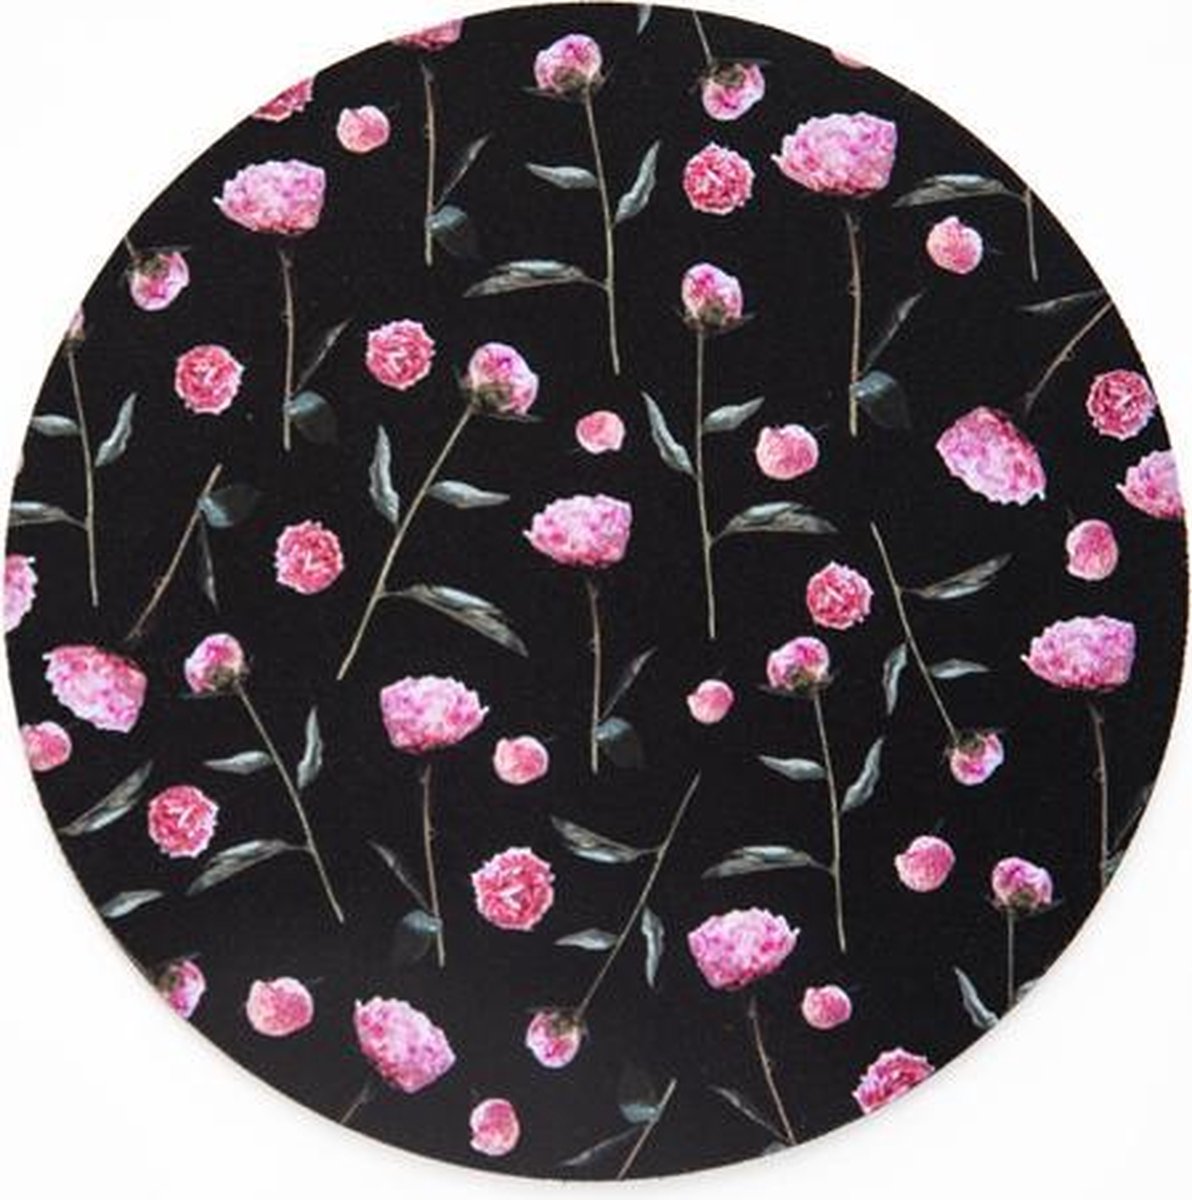 Computer - muismat pink flowers - rond - rubber - buigbaar - anti-slip - mousepad